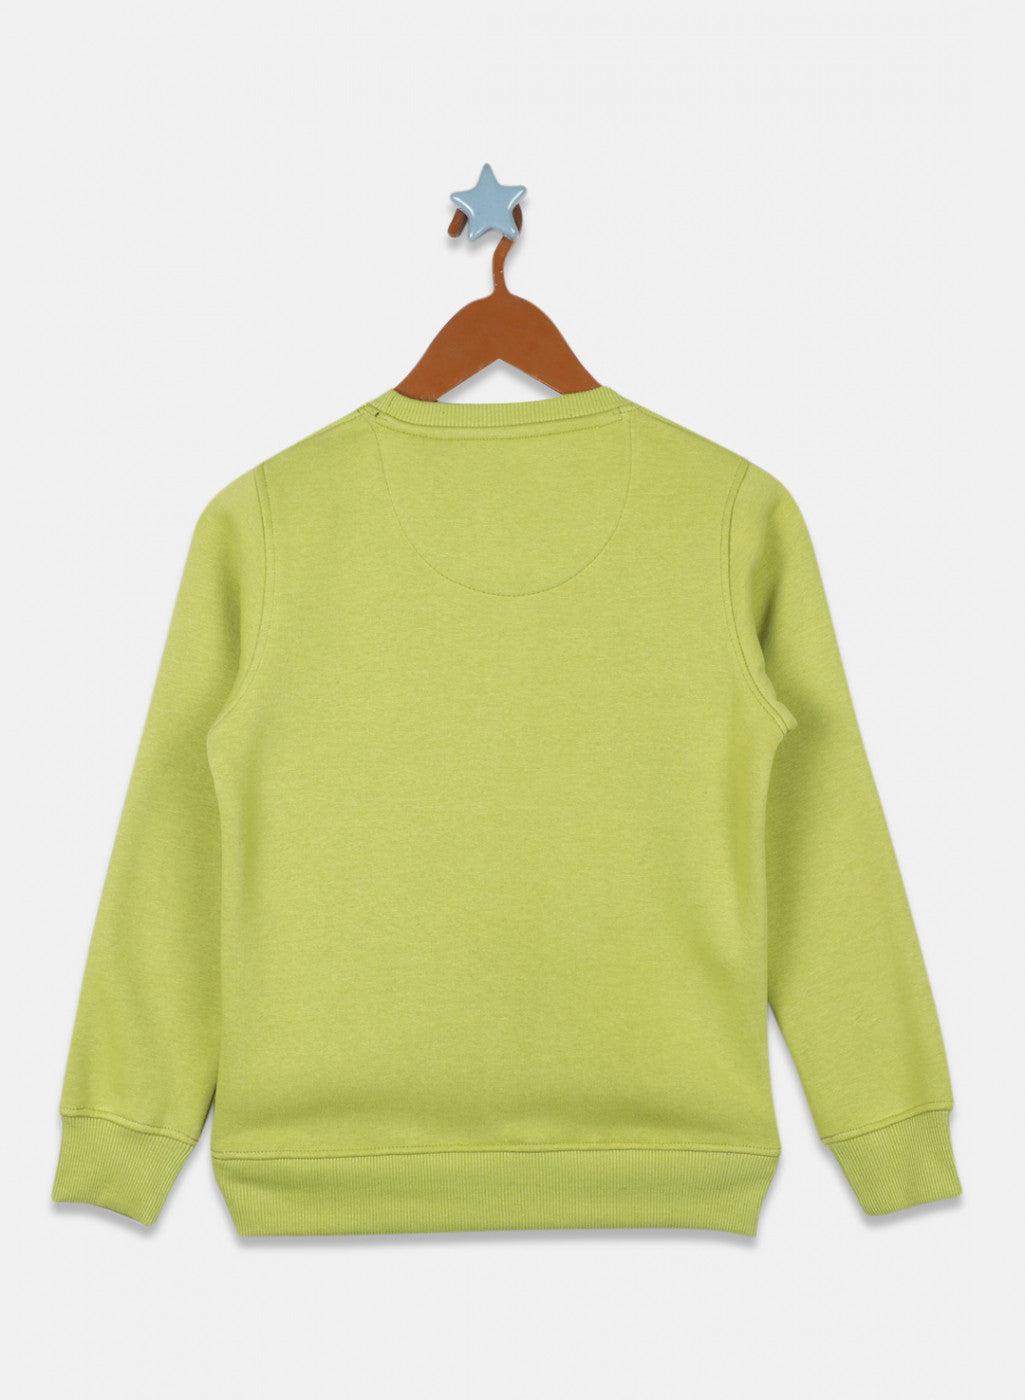 Boys Green Printed Sweatshirt